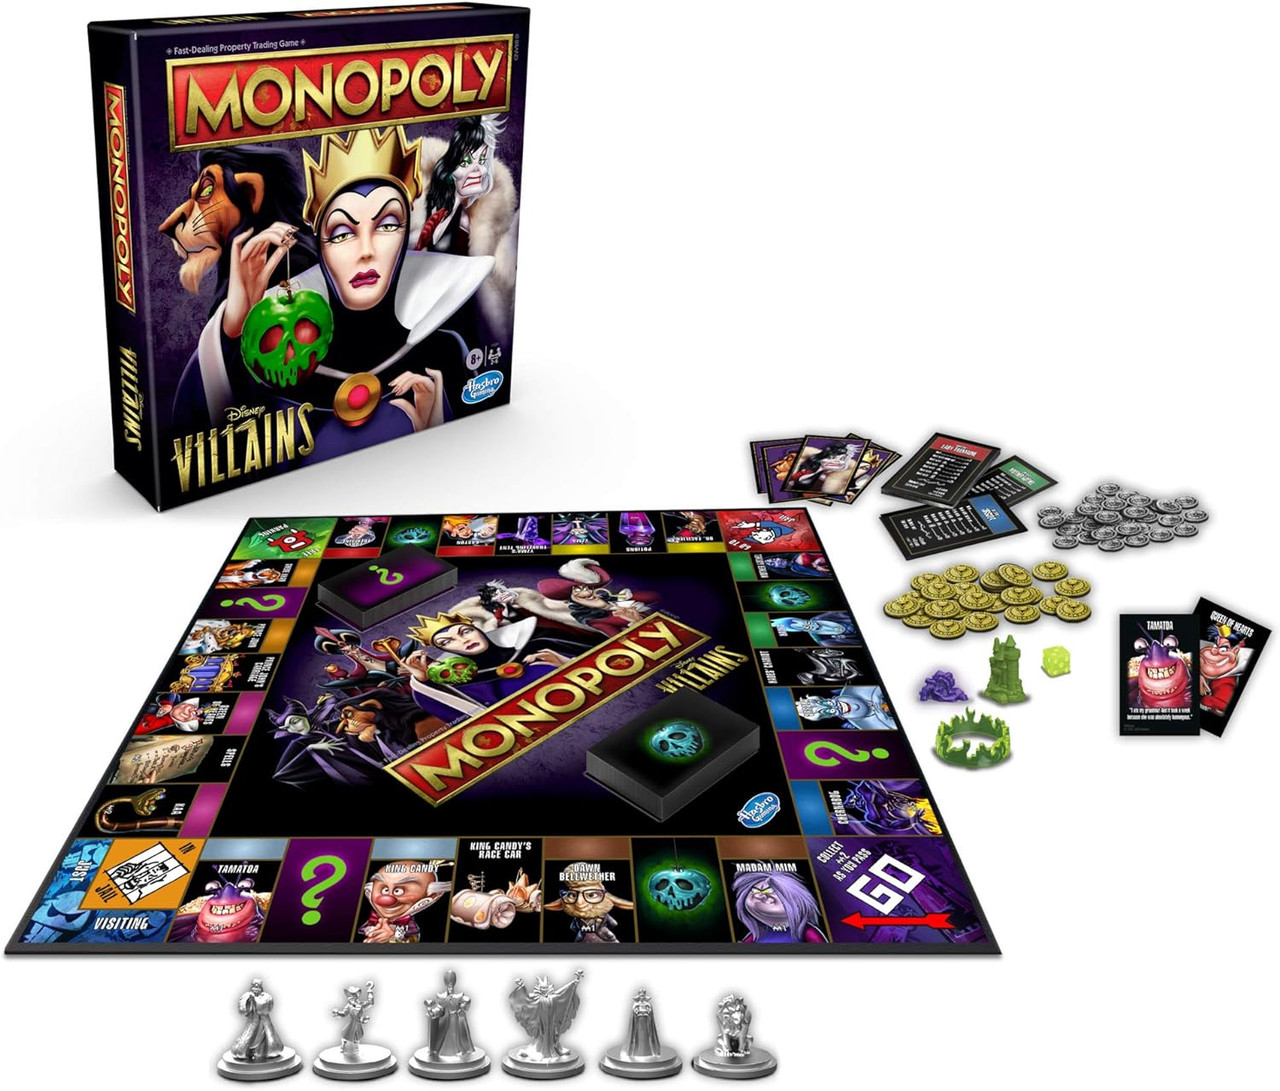 Monopoly: Disney Animation Edition